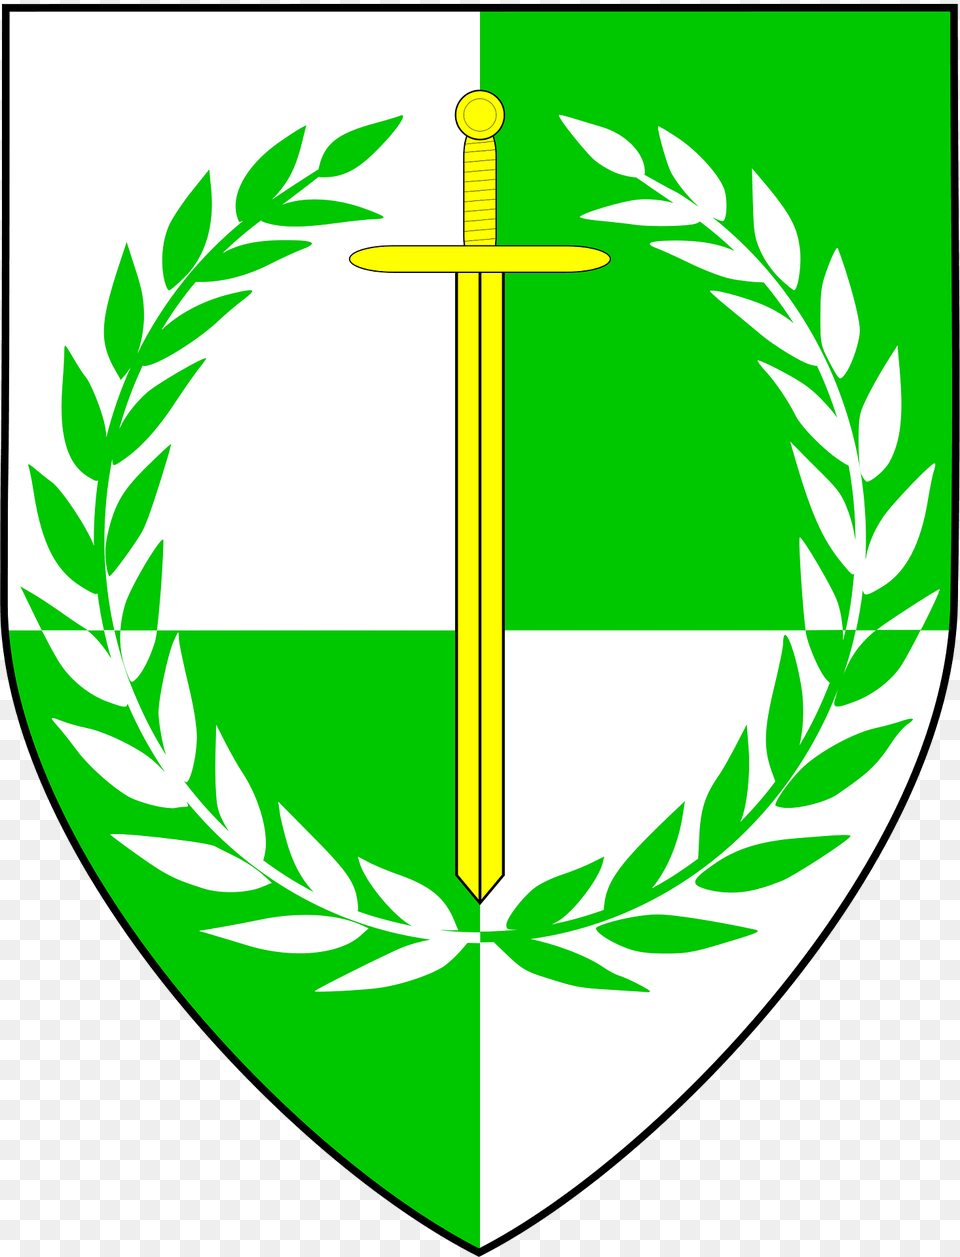 Laurel Wreath Clipart, Armor, Shield, Cross, Symbol Png